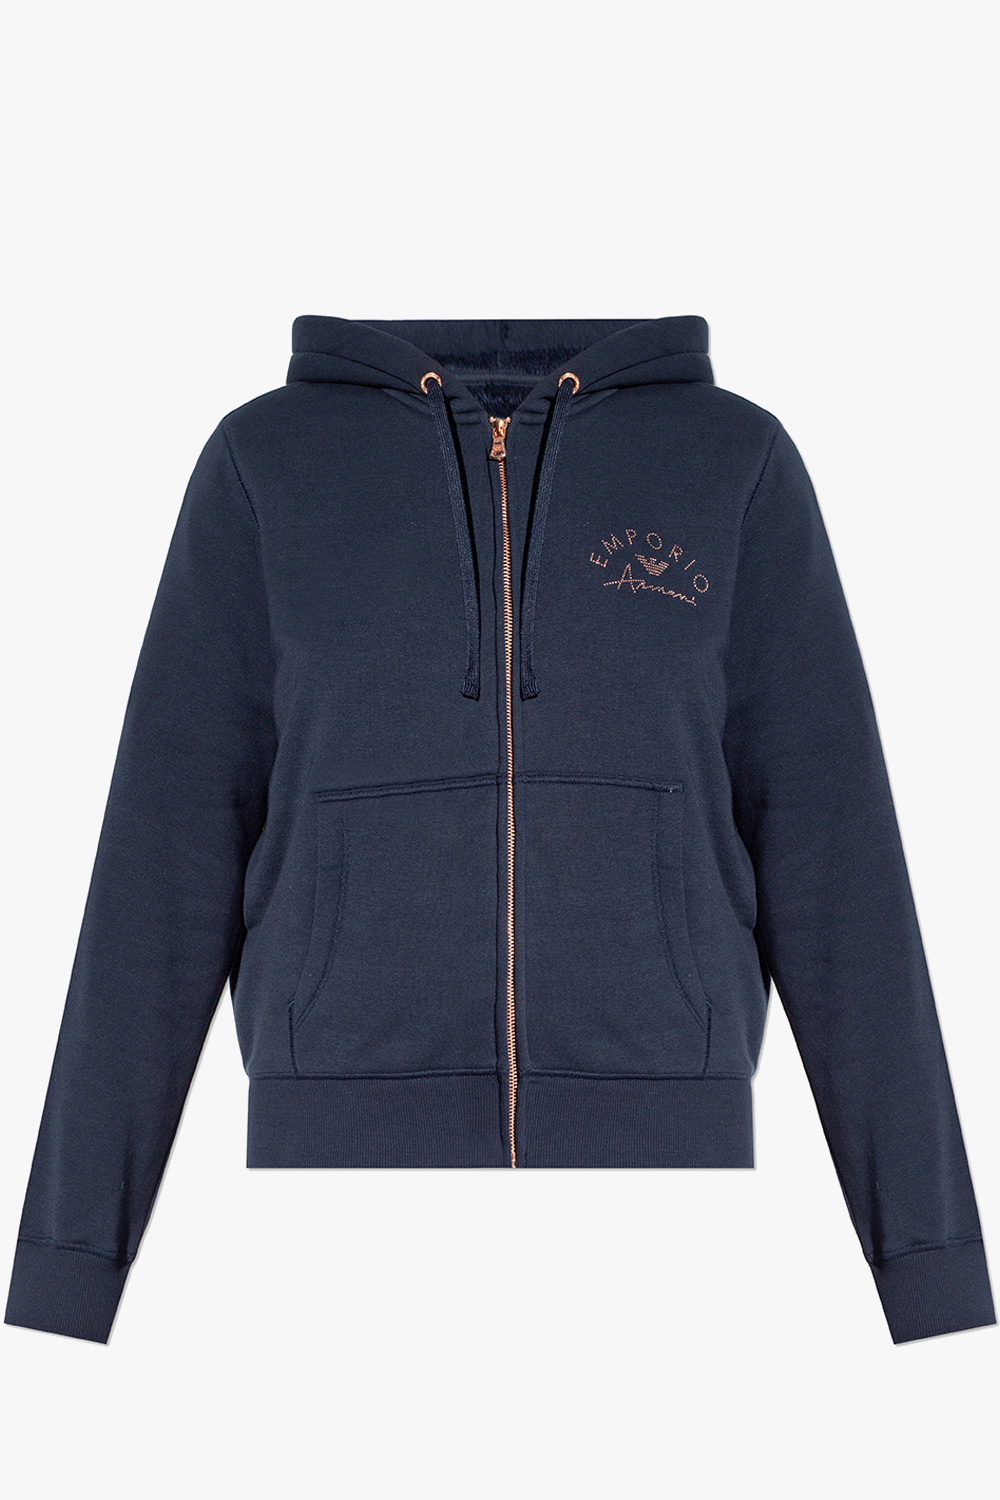 Emporio Armani Zip-up hoodie